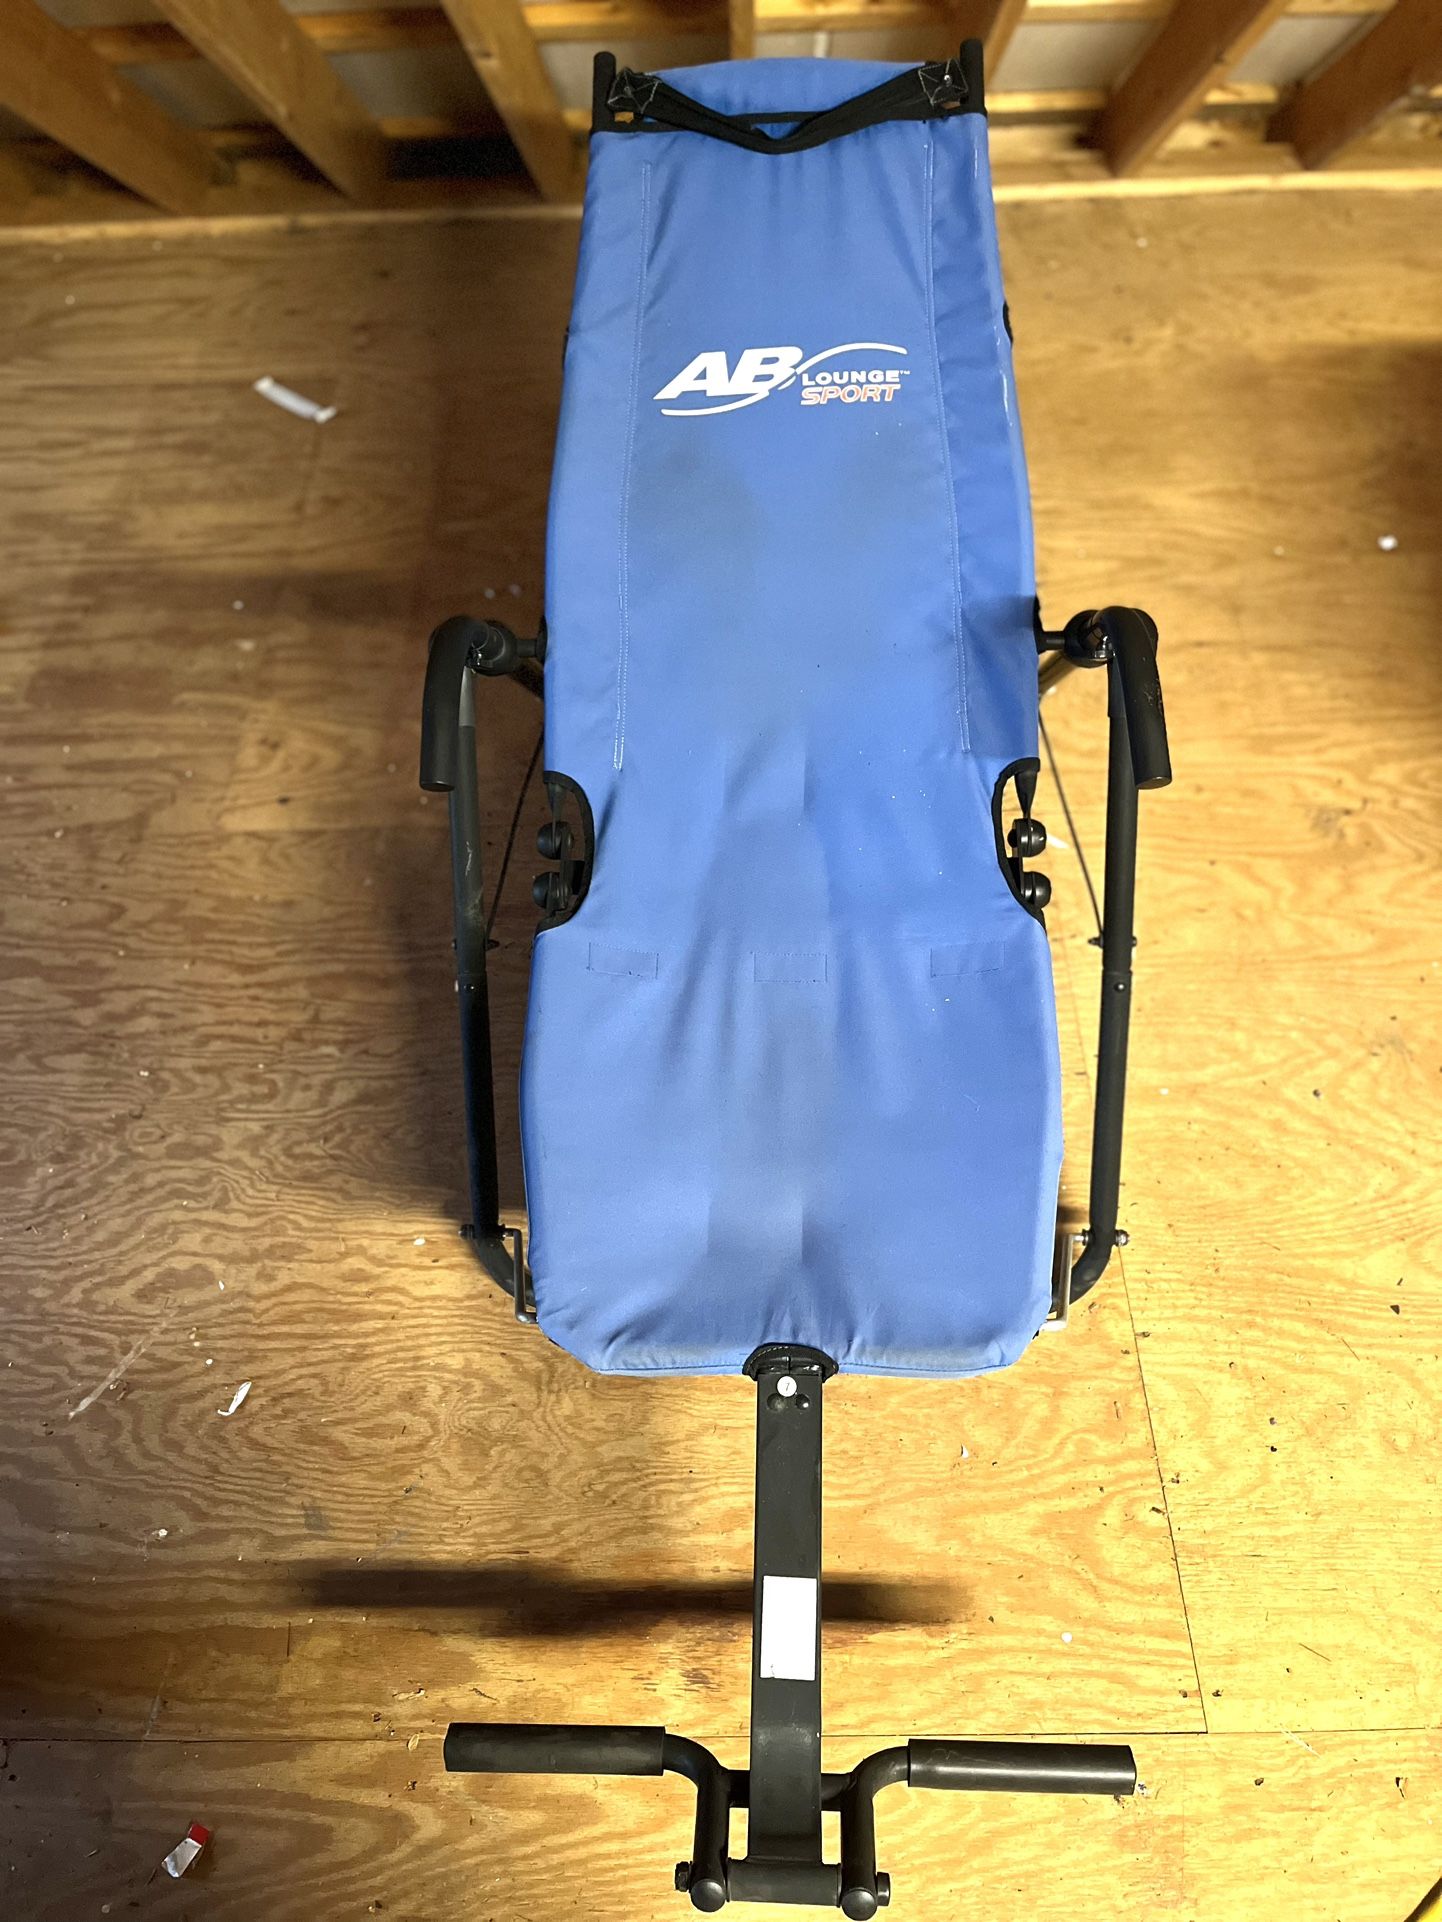 AB Lounger Sport Chair 